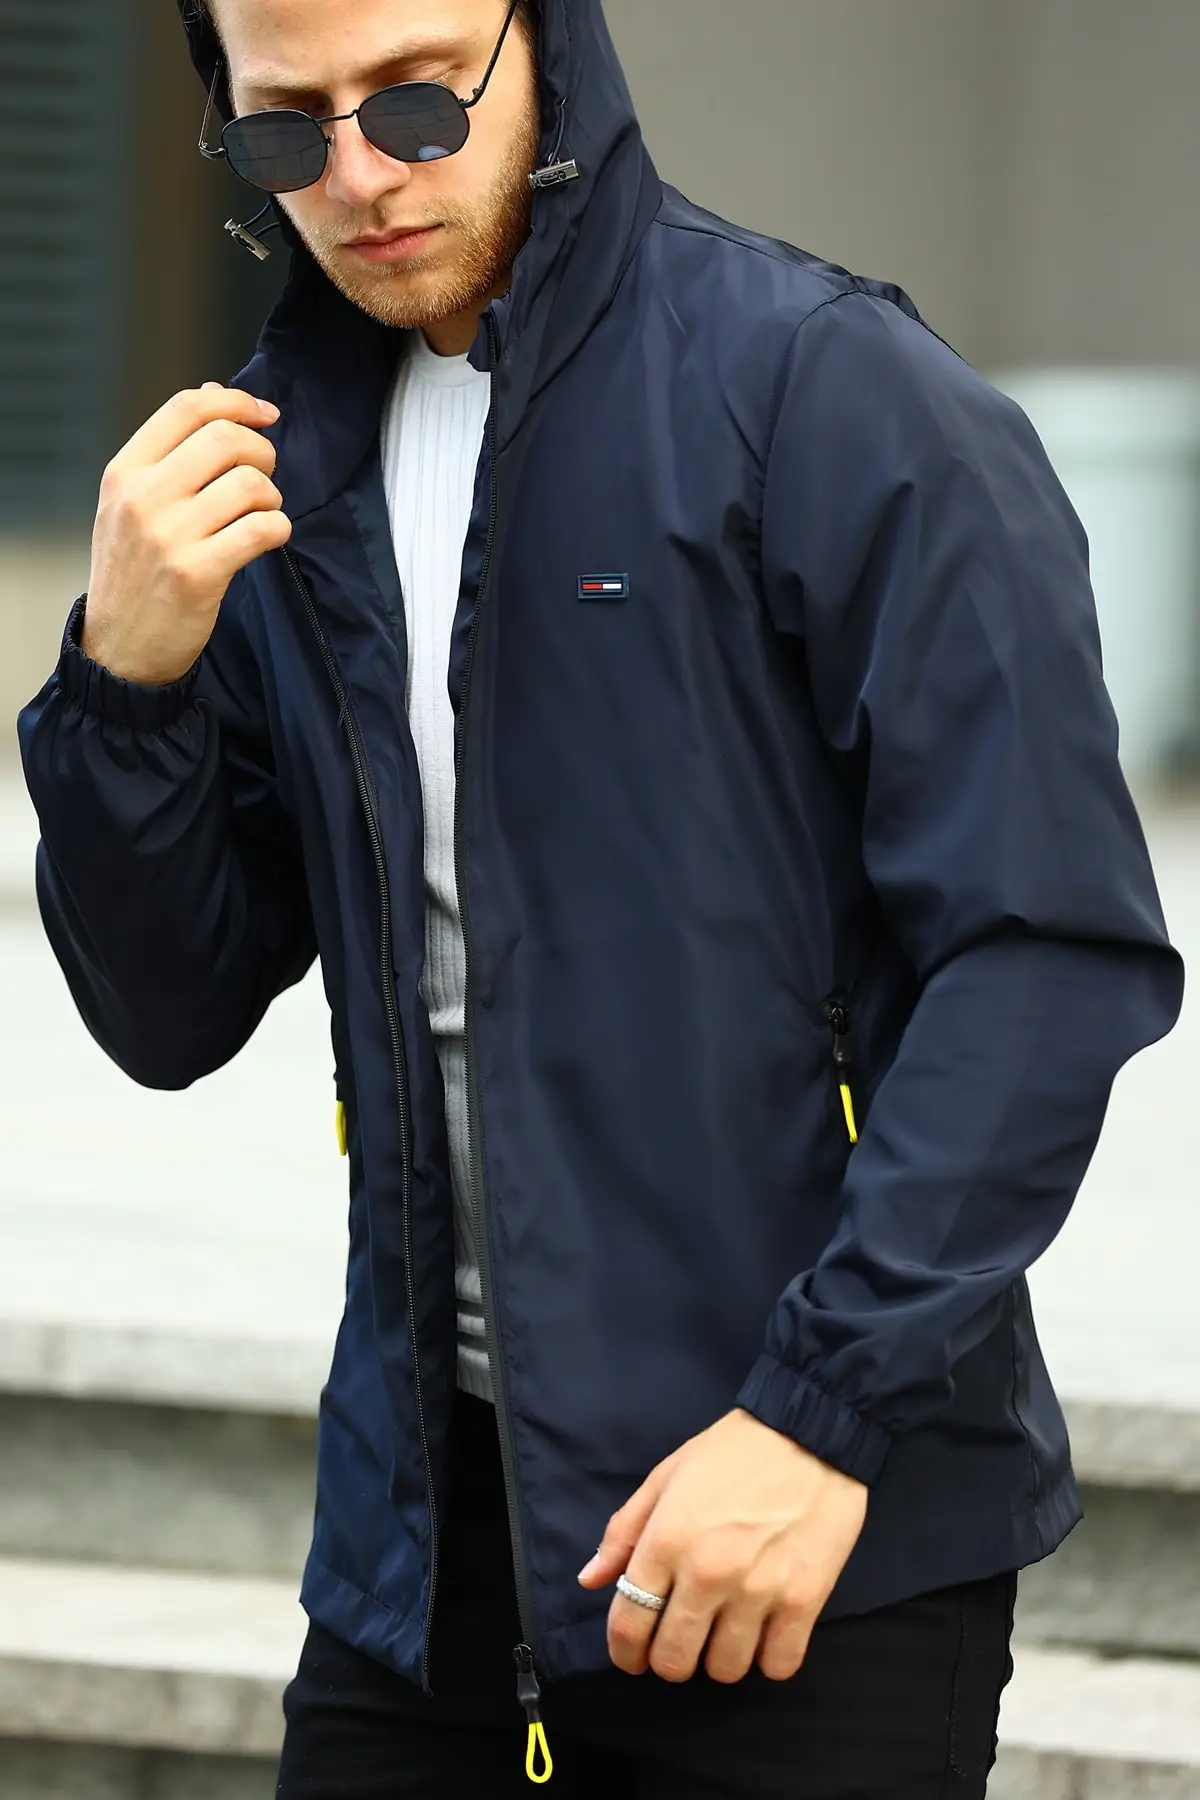 Içi-chubasquero impermeable con capucha para chaqueta cortavientos con forro, color marino, estilo de invierno, a la moda, 2021 _ - AliExpress Mobile